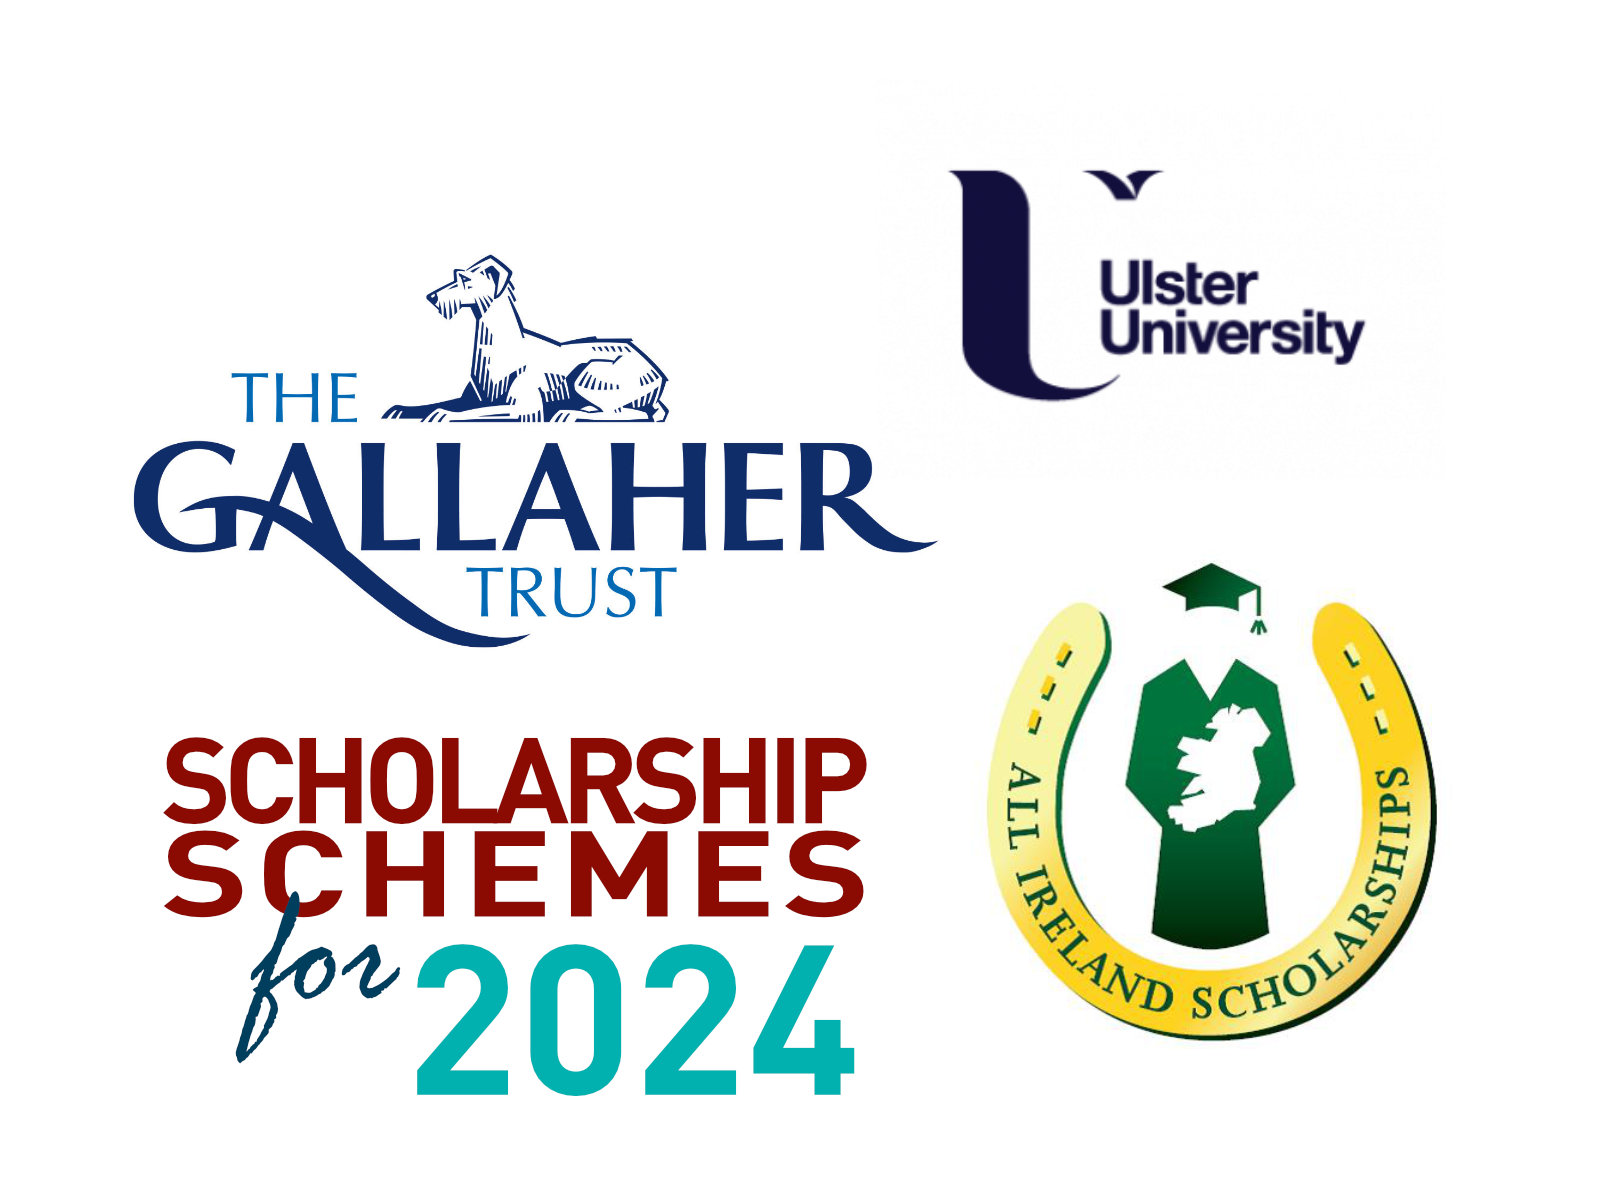 Scholarship schemes for 2024